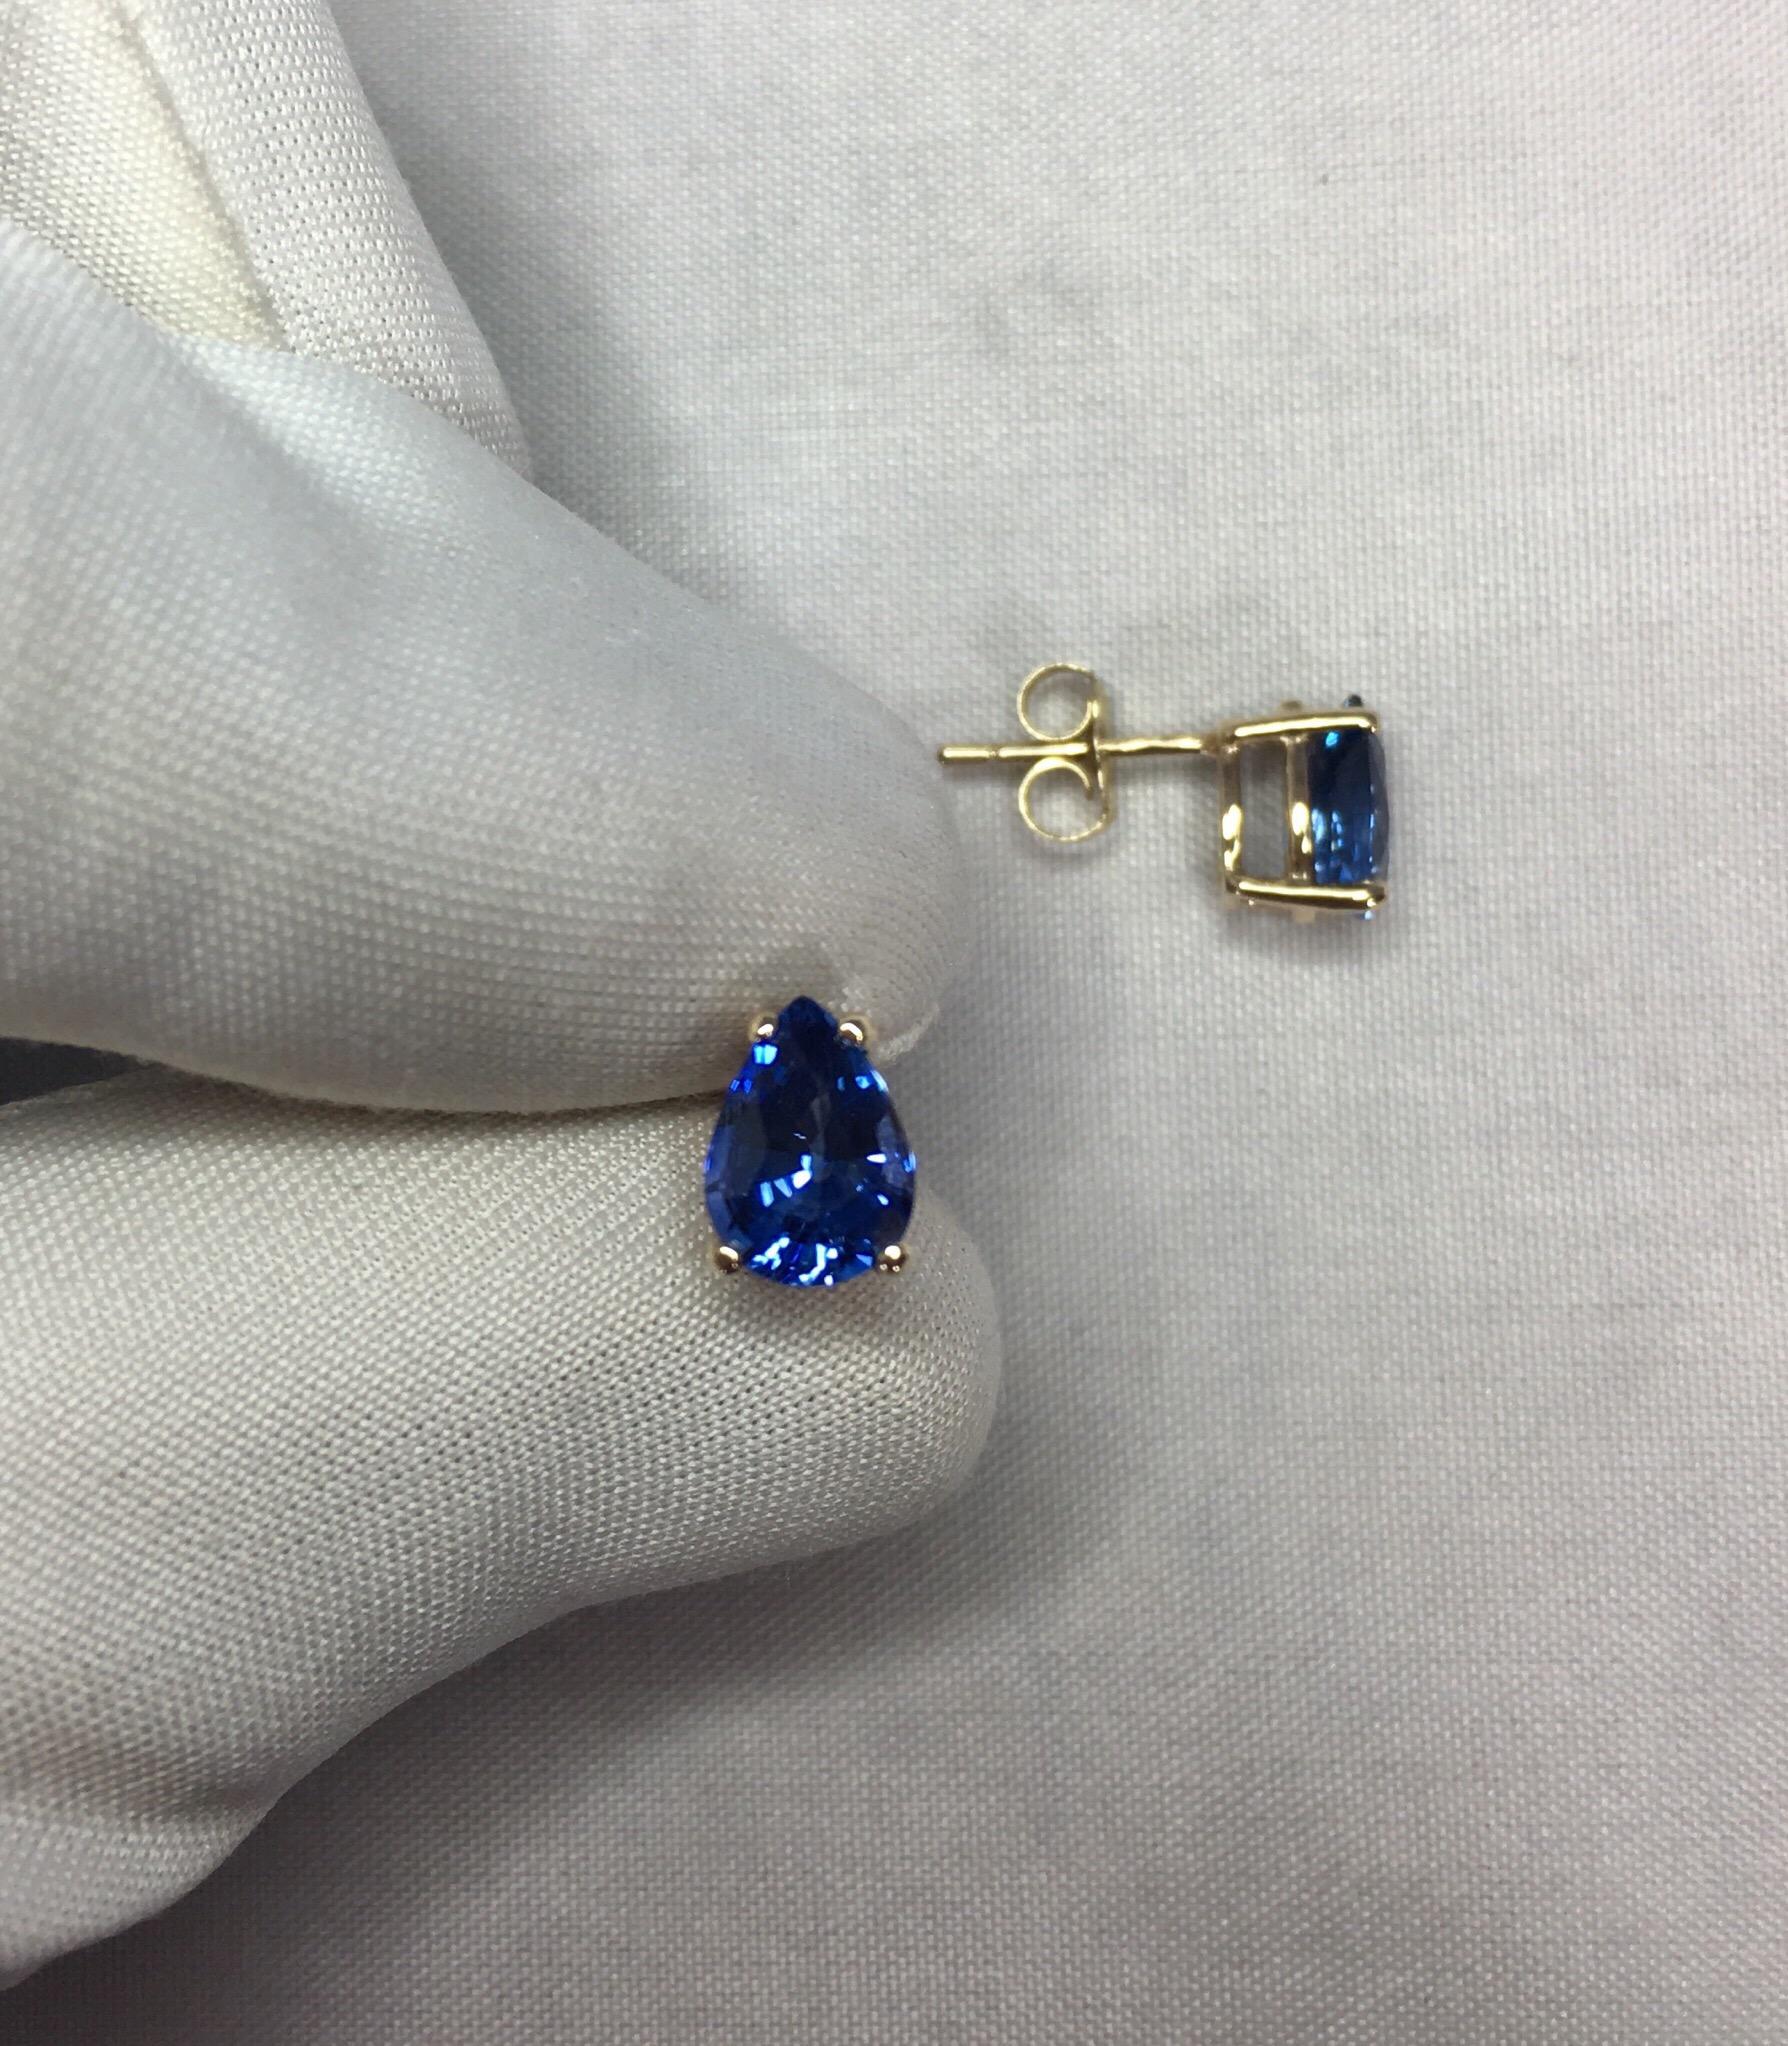 Vivid Cornflower Blue 2.25 Carat Ceylon Sapphire Pear Cut Gold Earring Studs 3